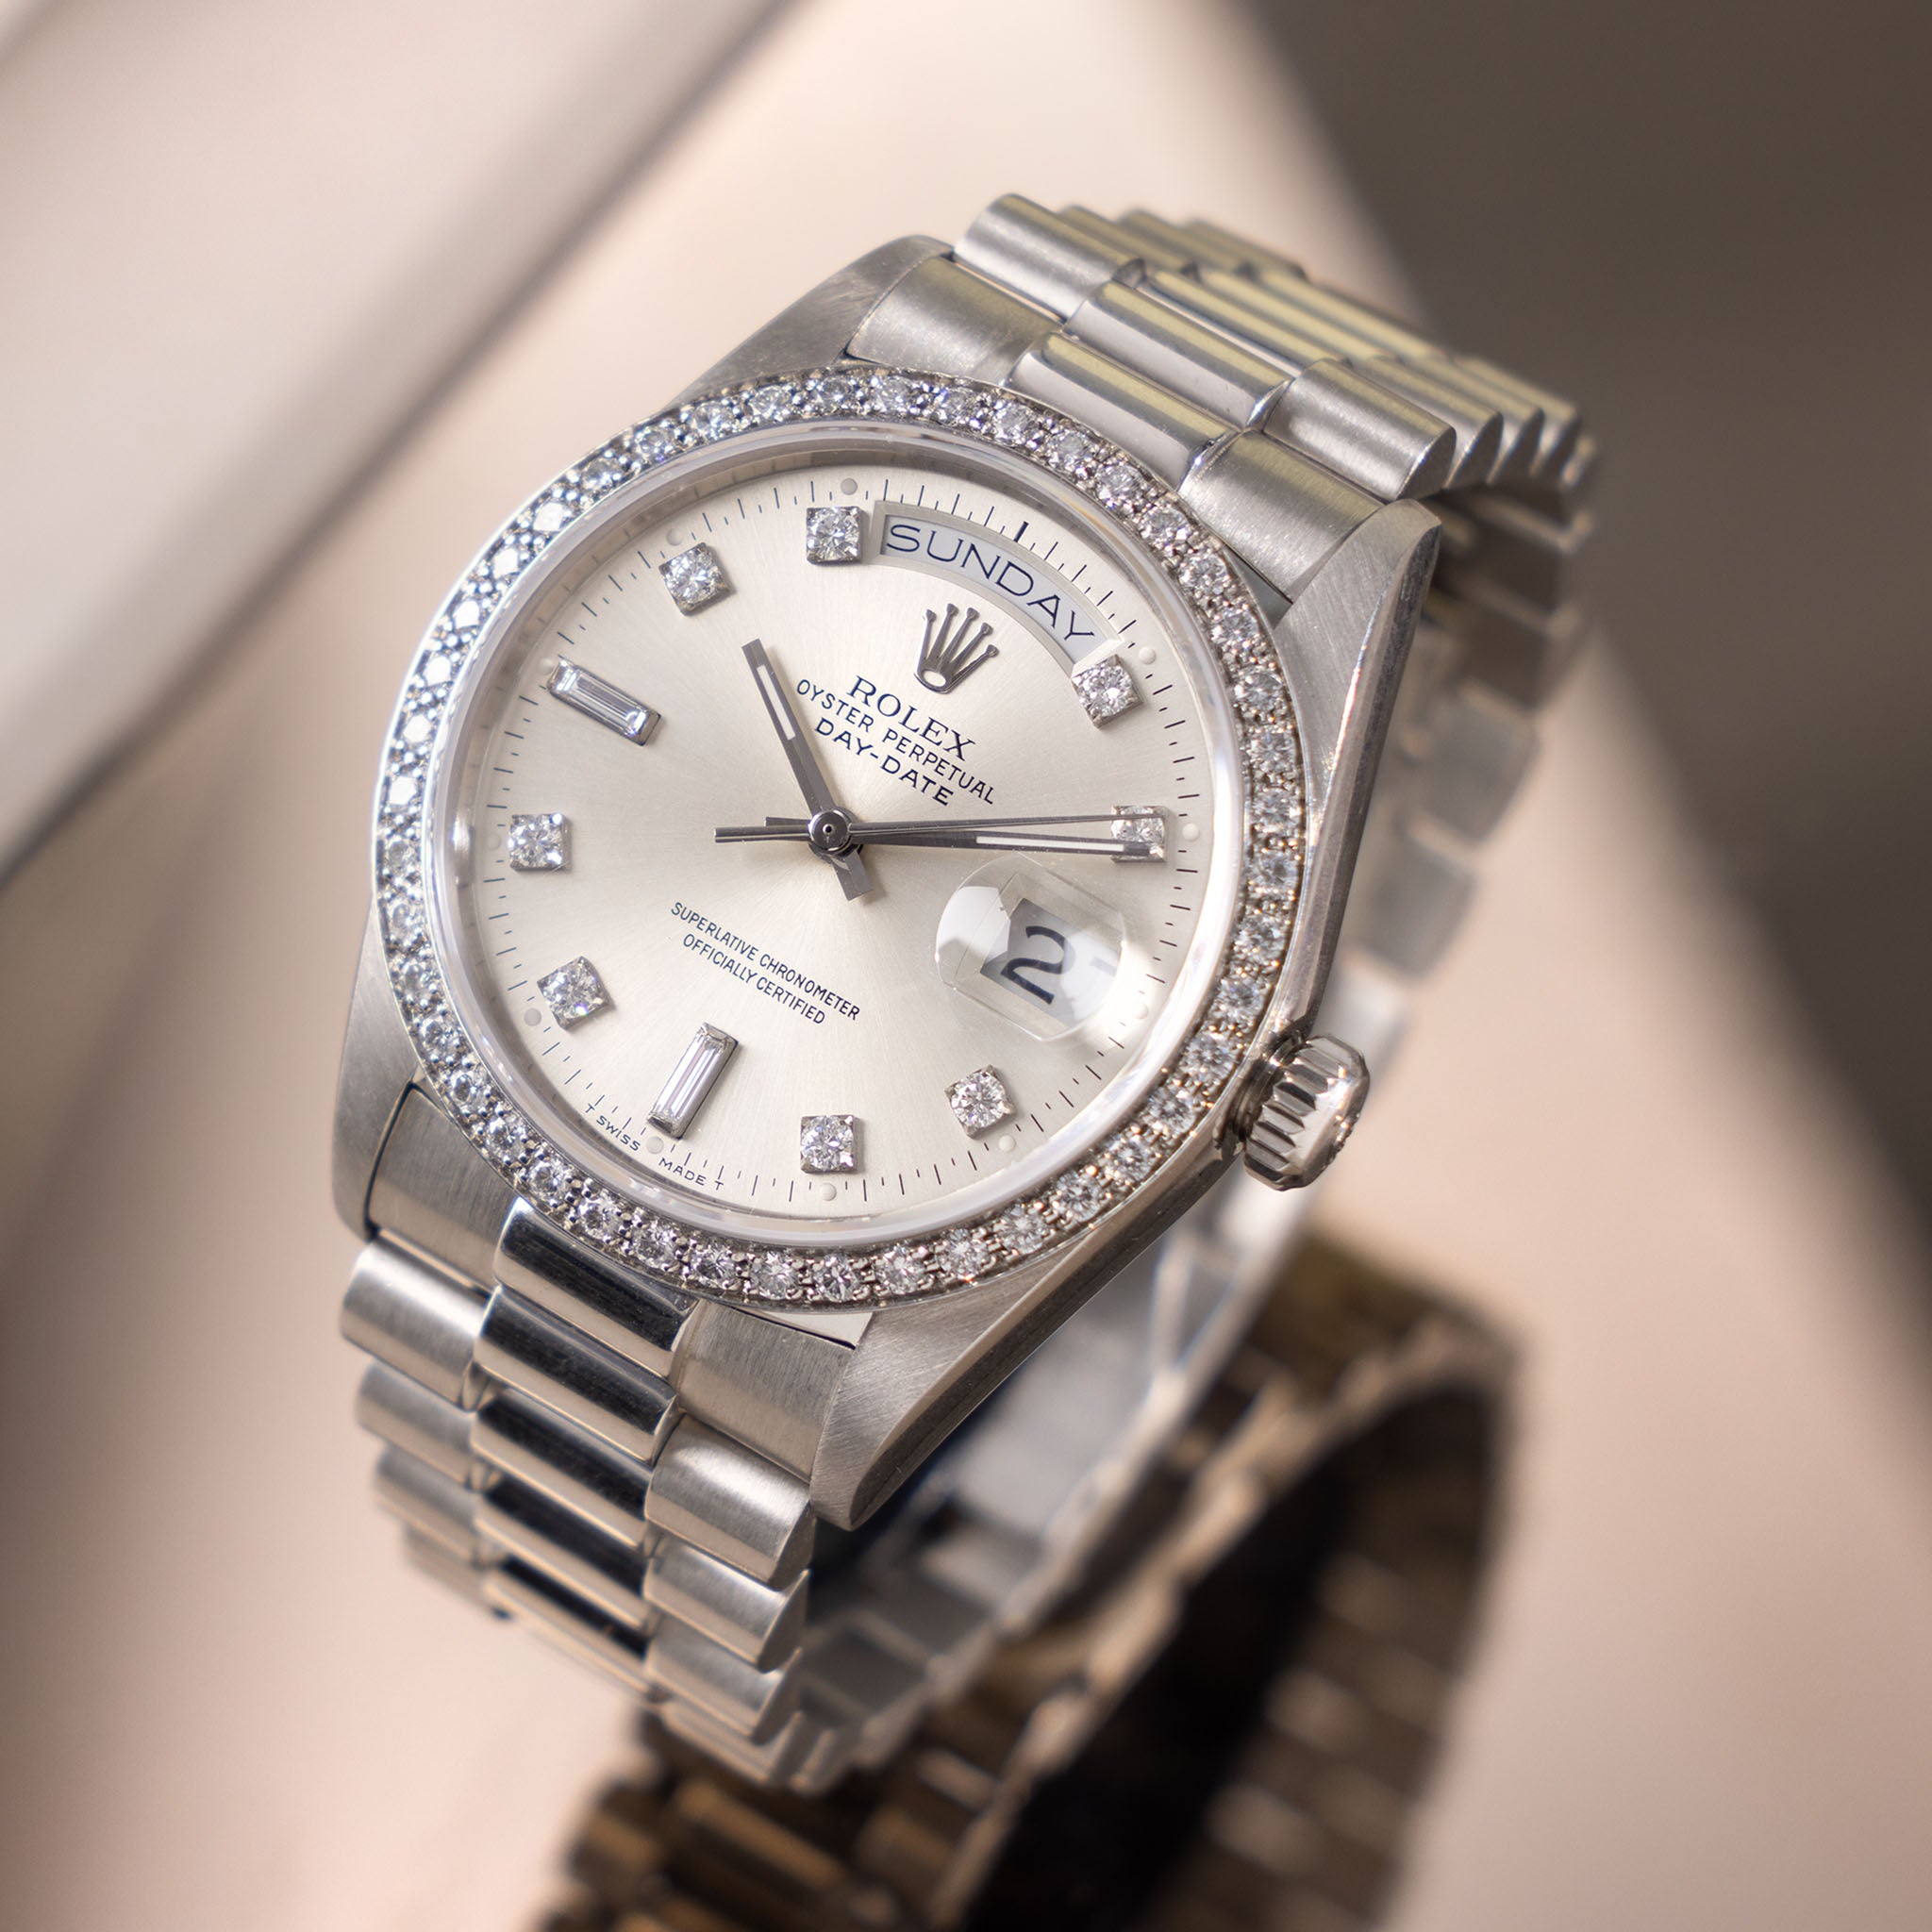 Rolex Day-date silver sunburst big diamond dial ref. 18046 in platinum